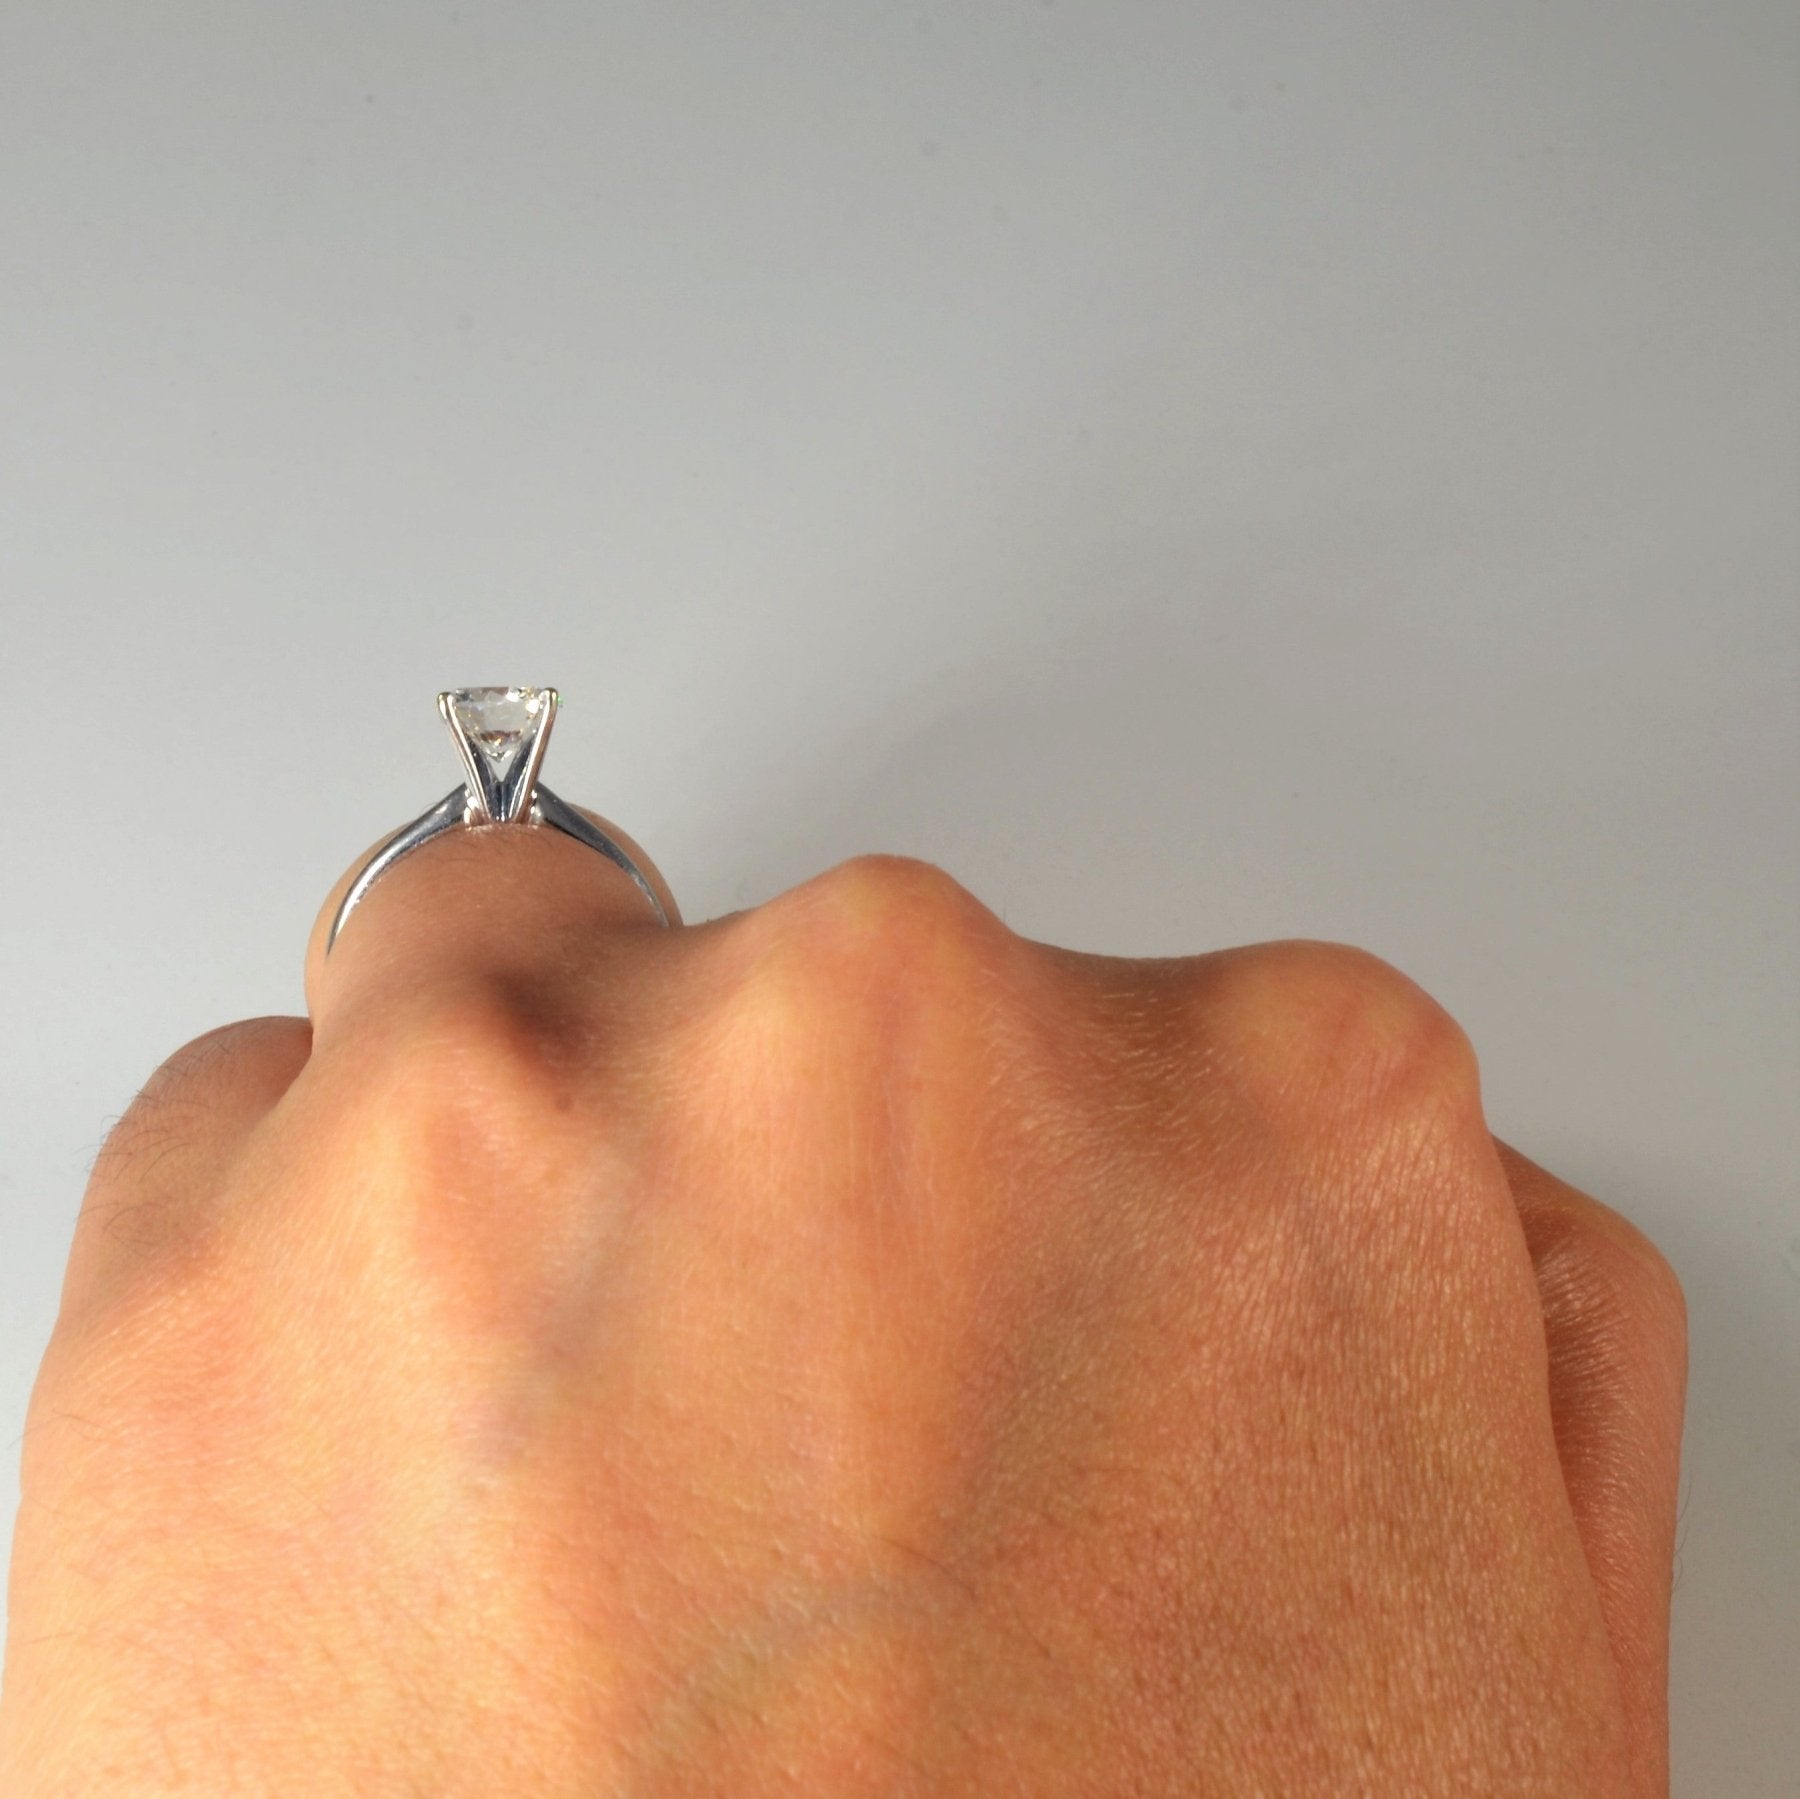 'Michael Hill' Solitaire Diamond Engagement Ring | 1.02ct | SZ 4 | - 100 Ways